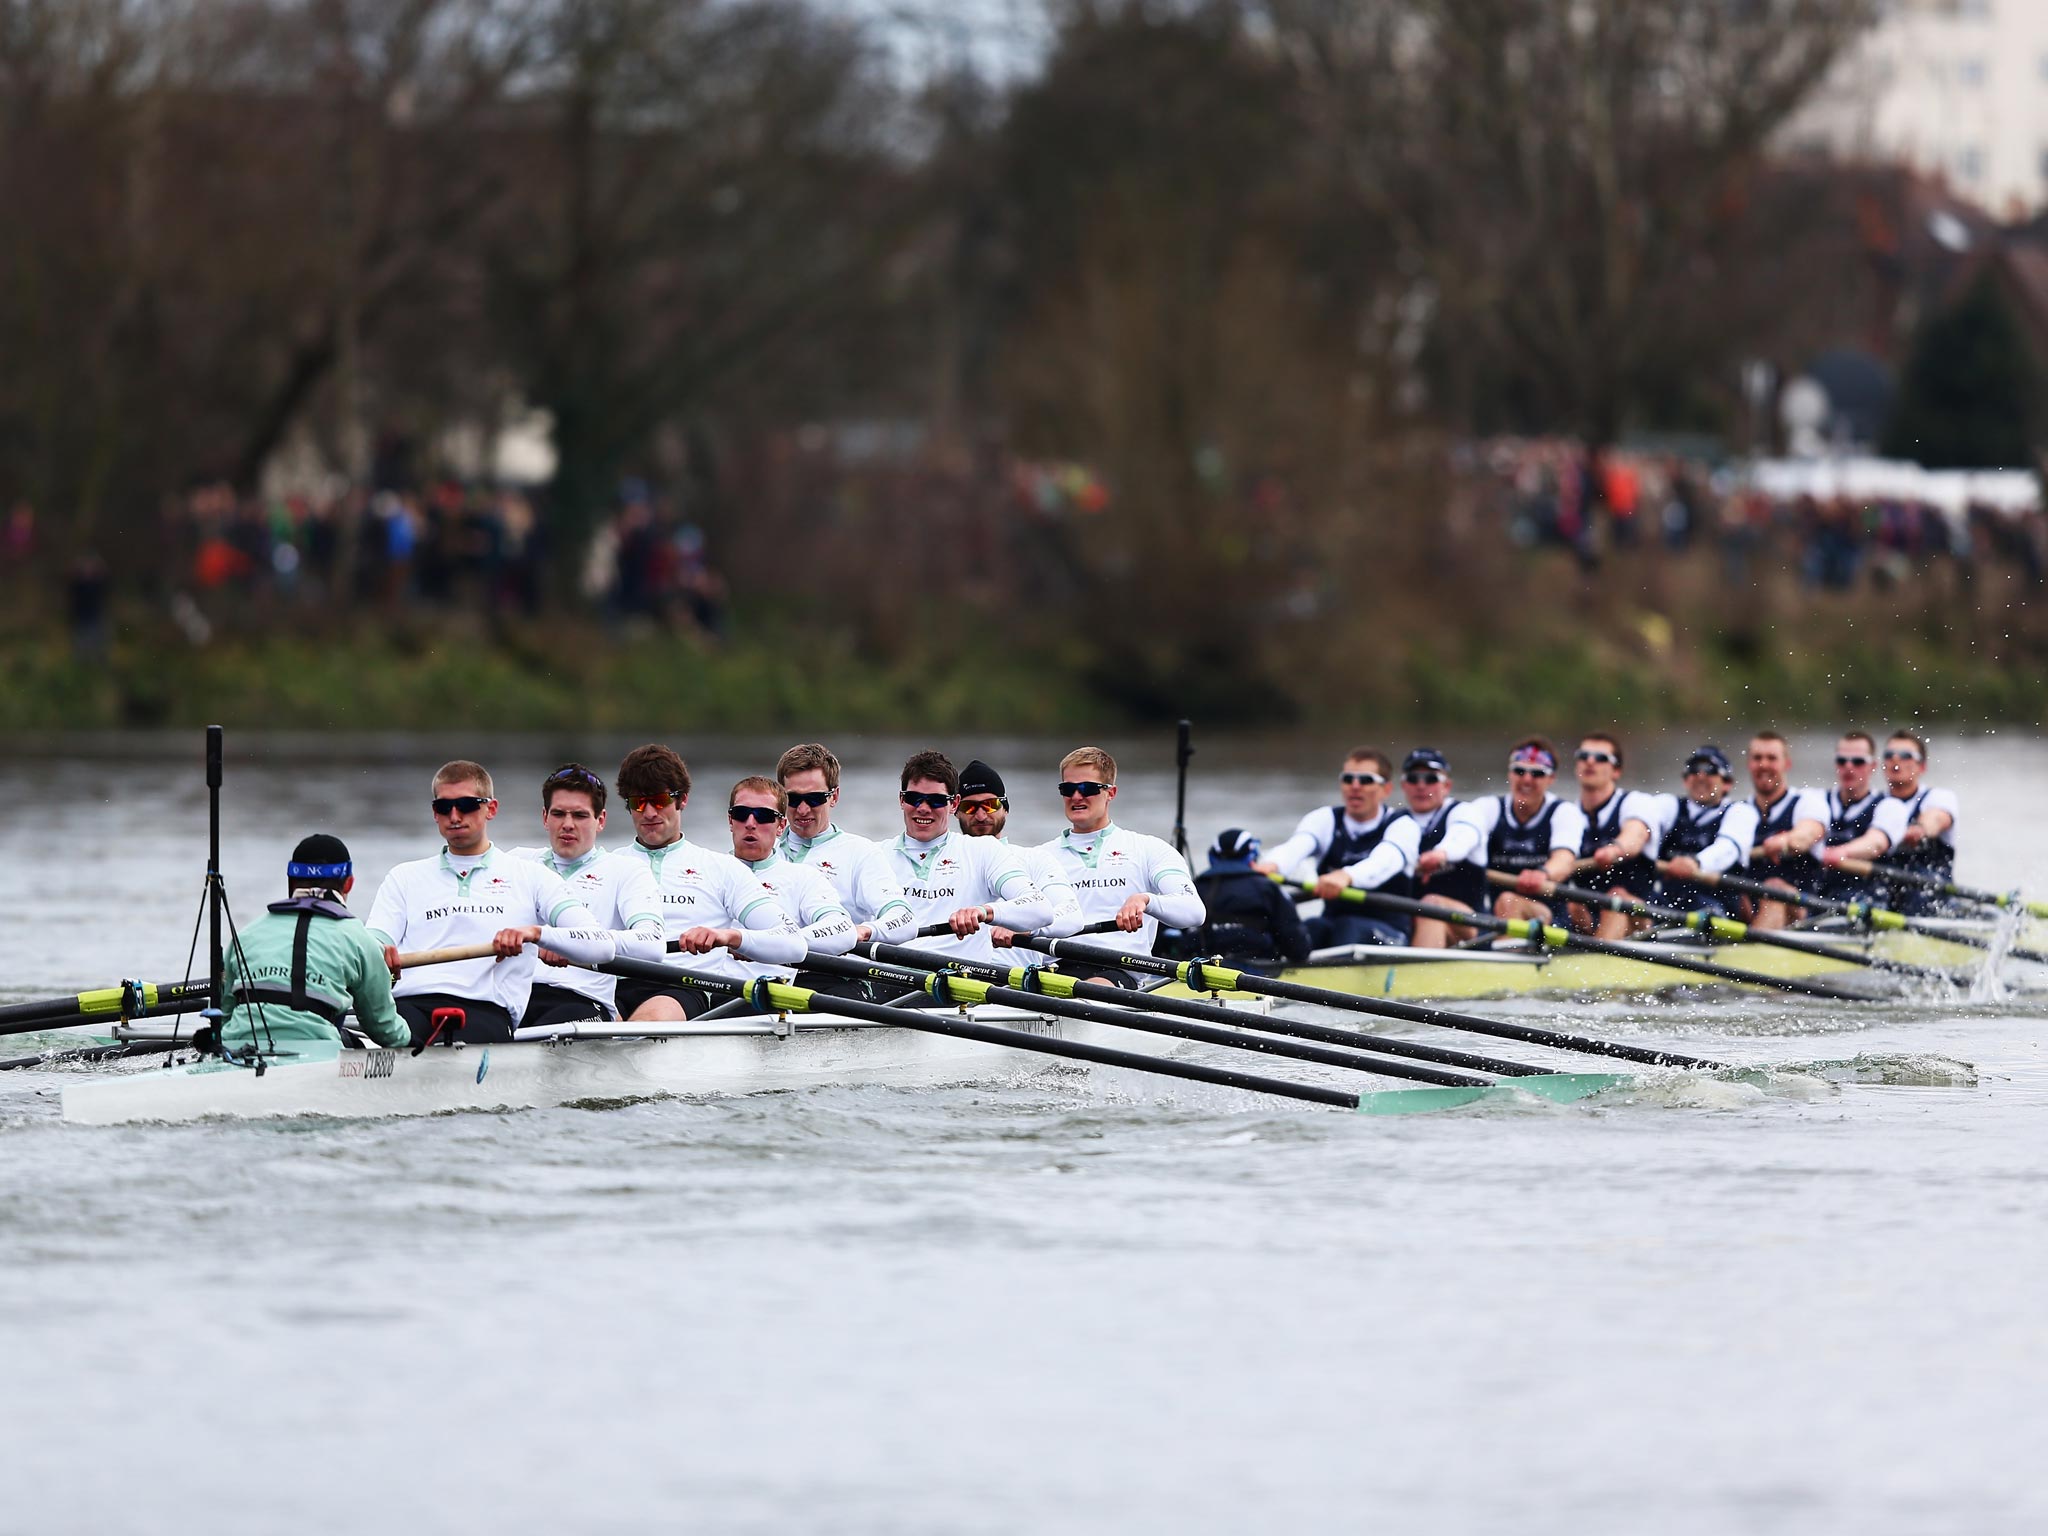 Oxford lead Cambridge in the 2013 Boat Race